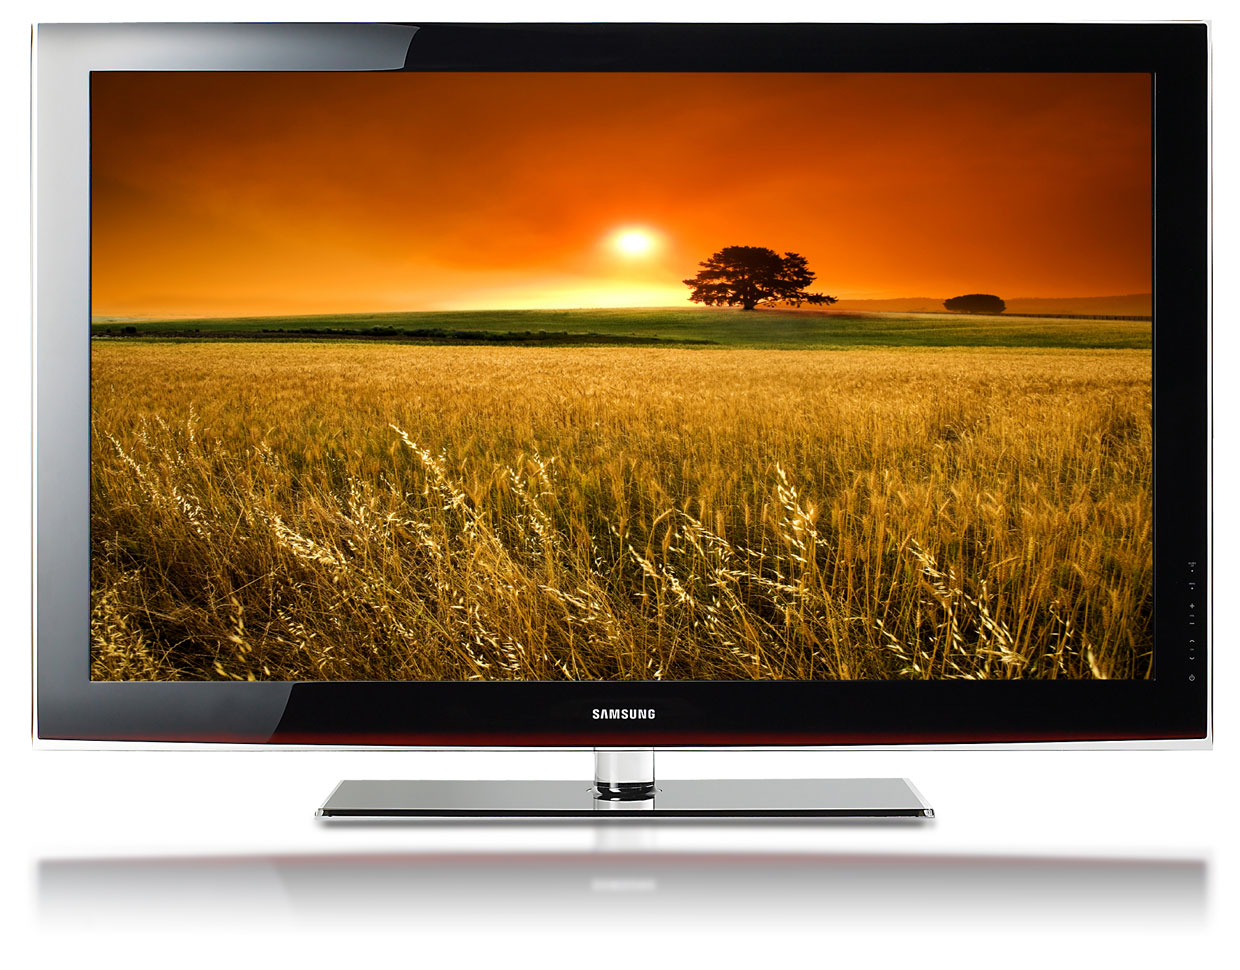  Daftar  Harga  TV  LCD  Terbaru 2014 grosir baju jawa